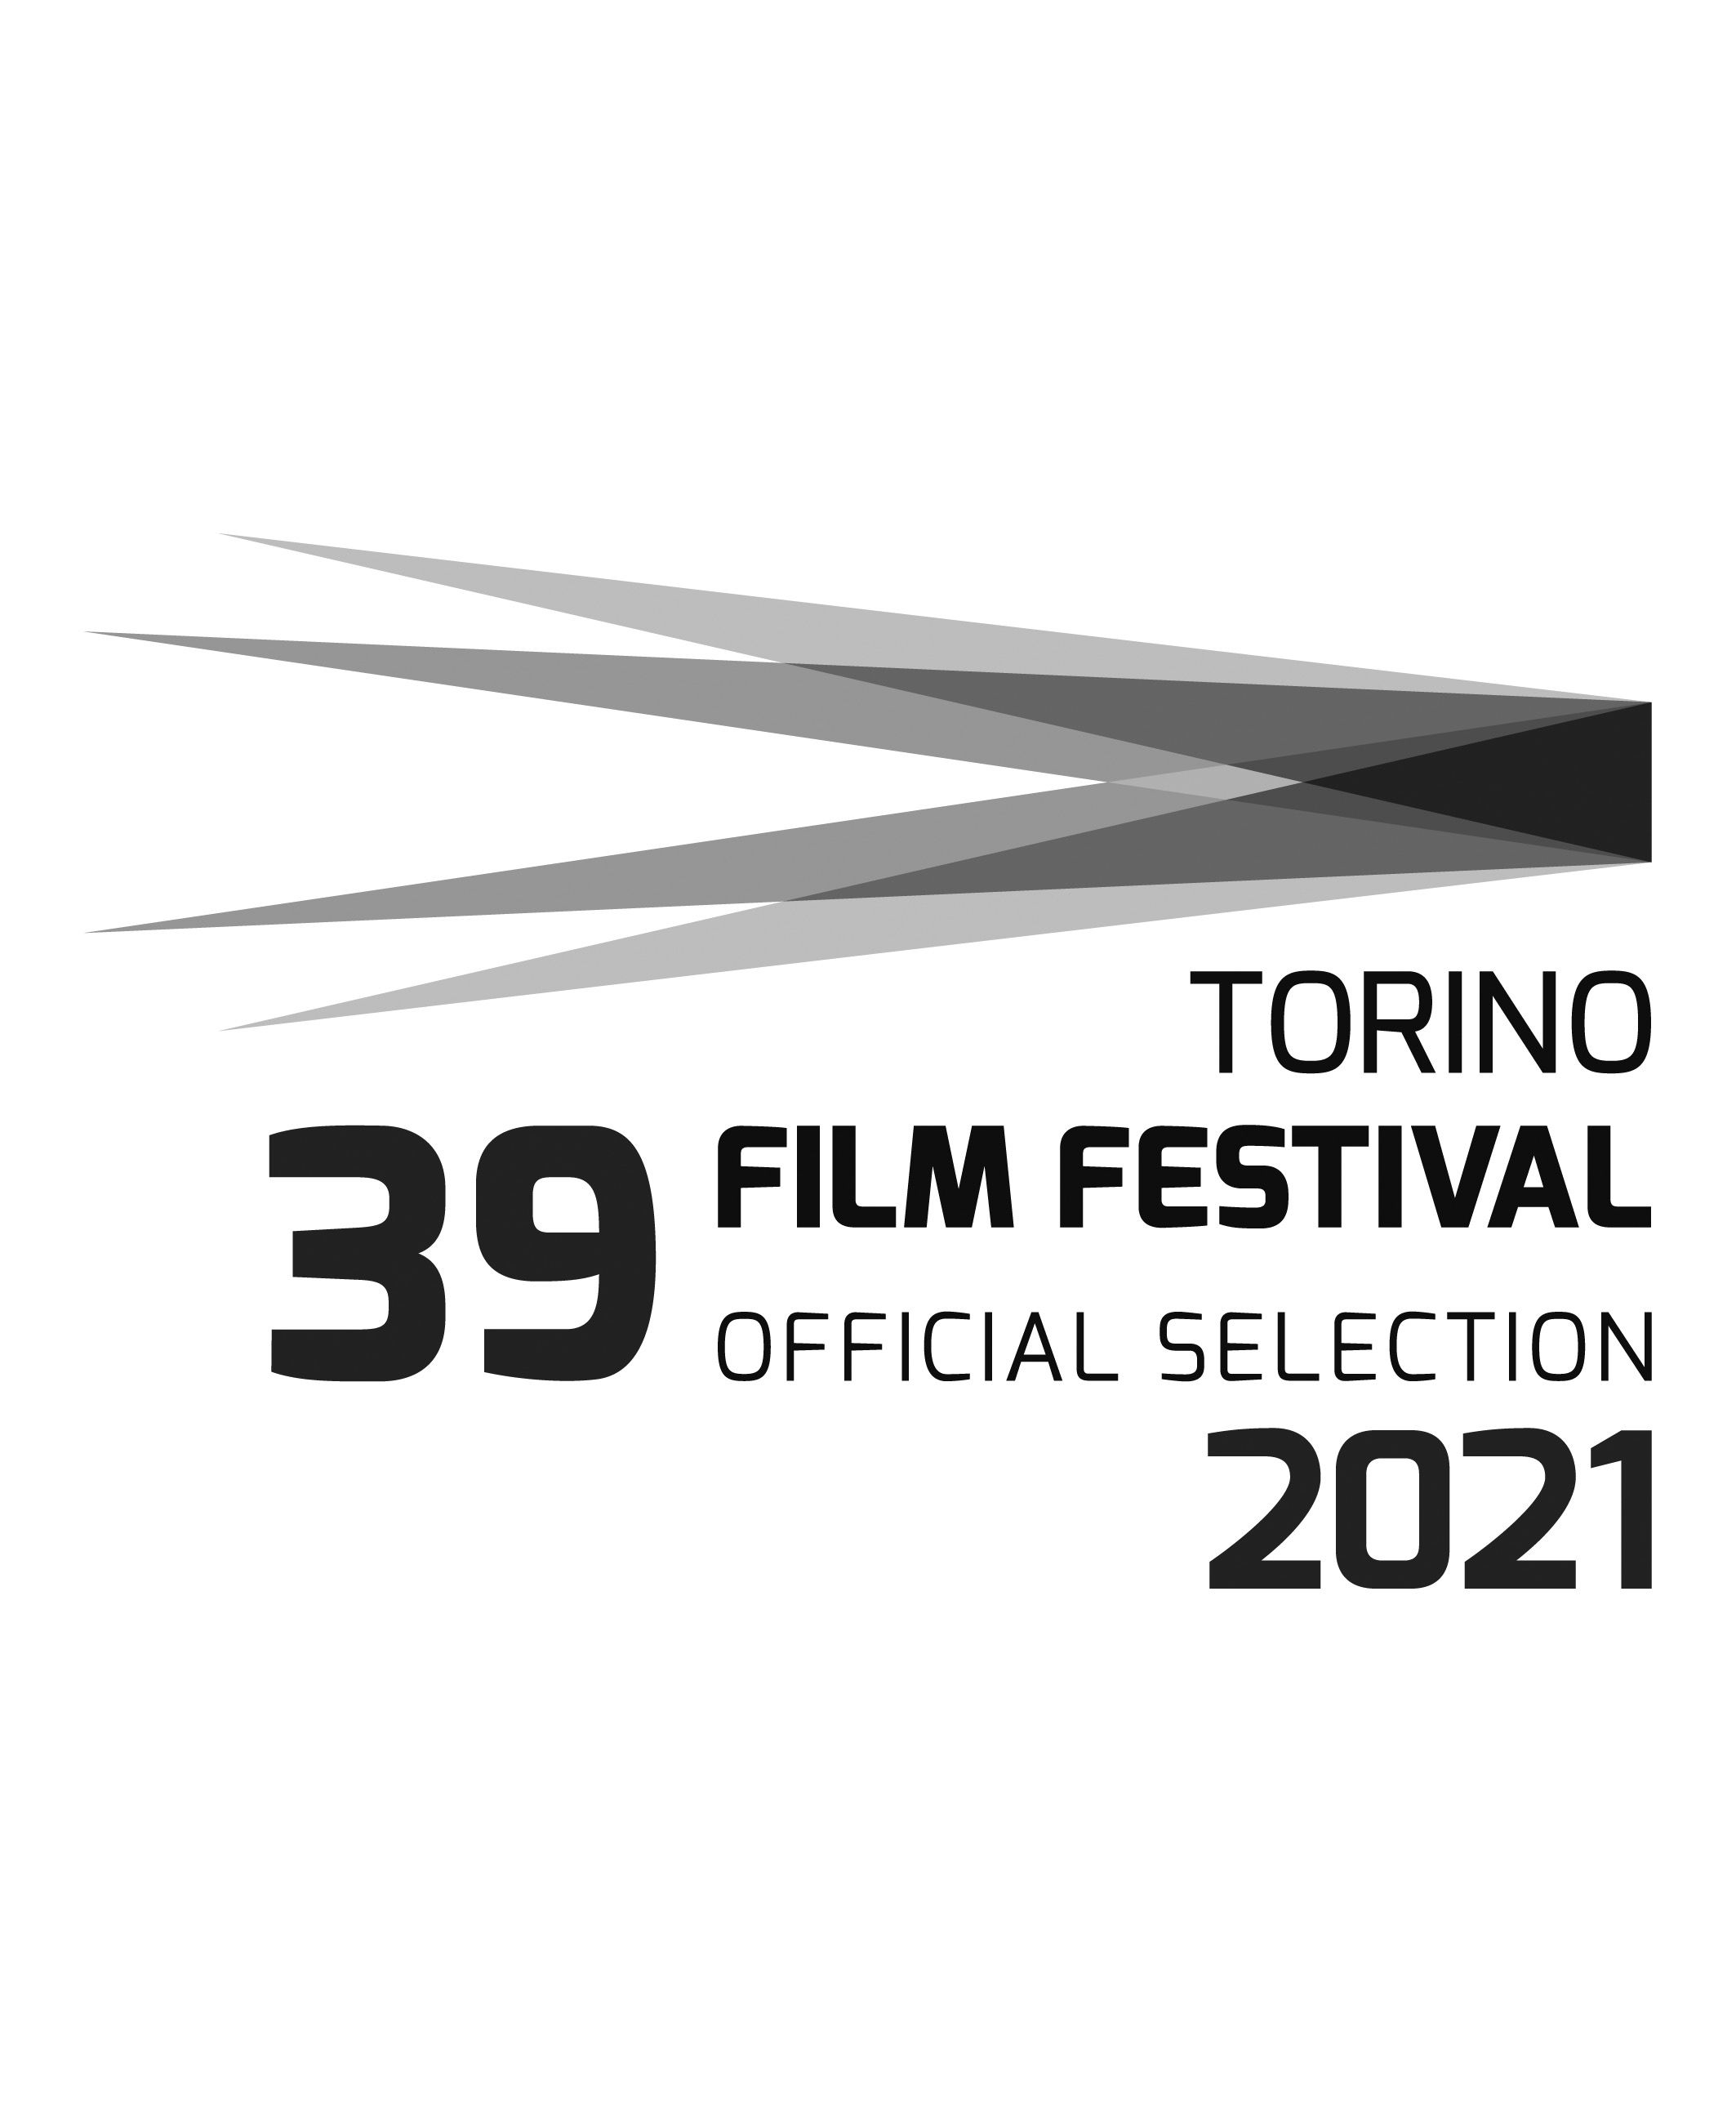 Torino Film Festival 2021 - Official Selection - Bipolar